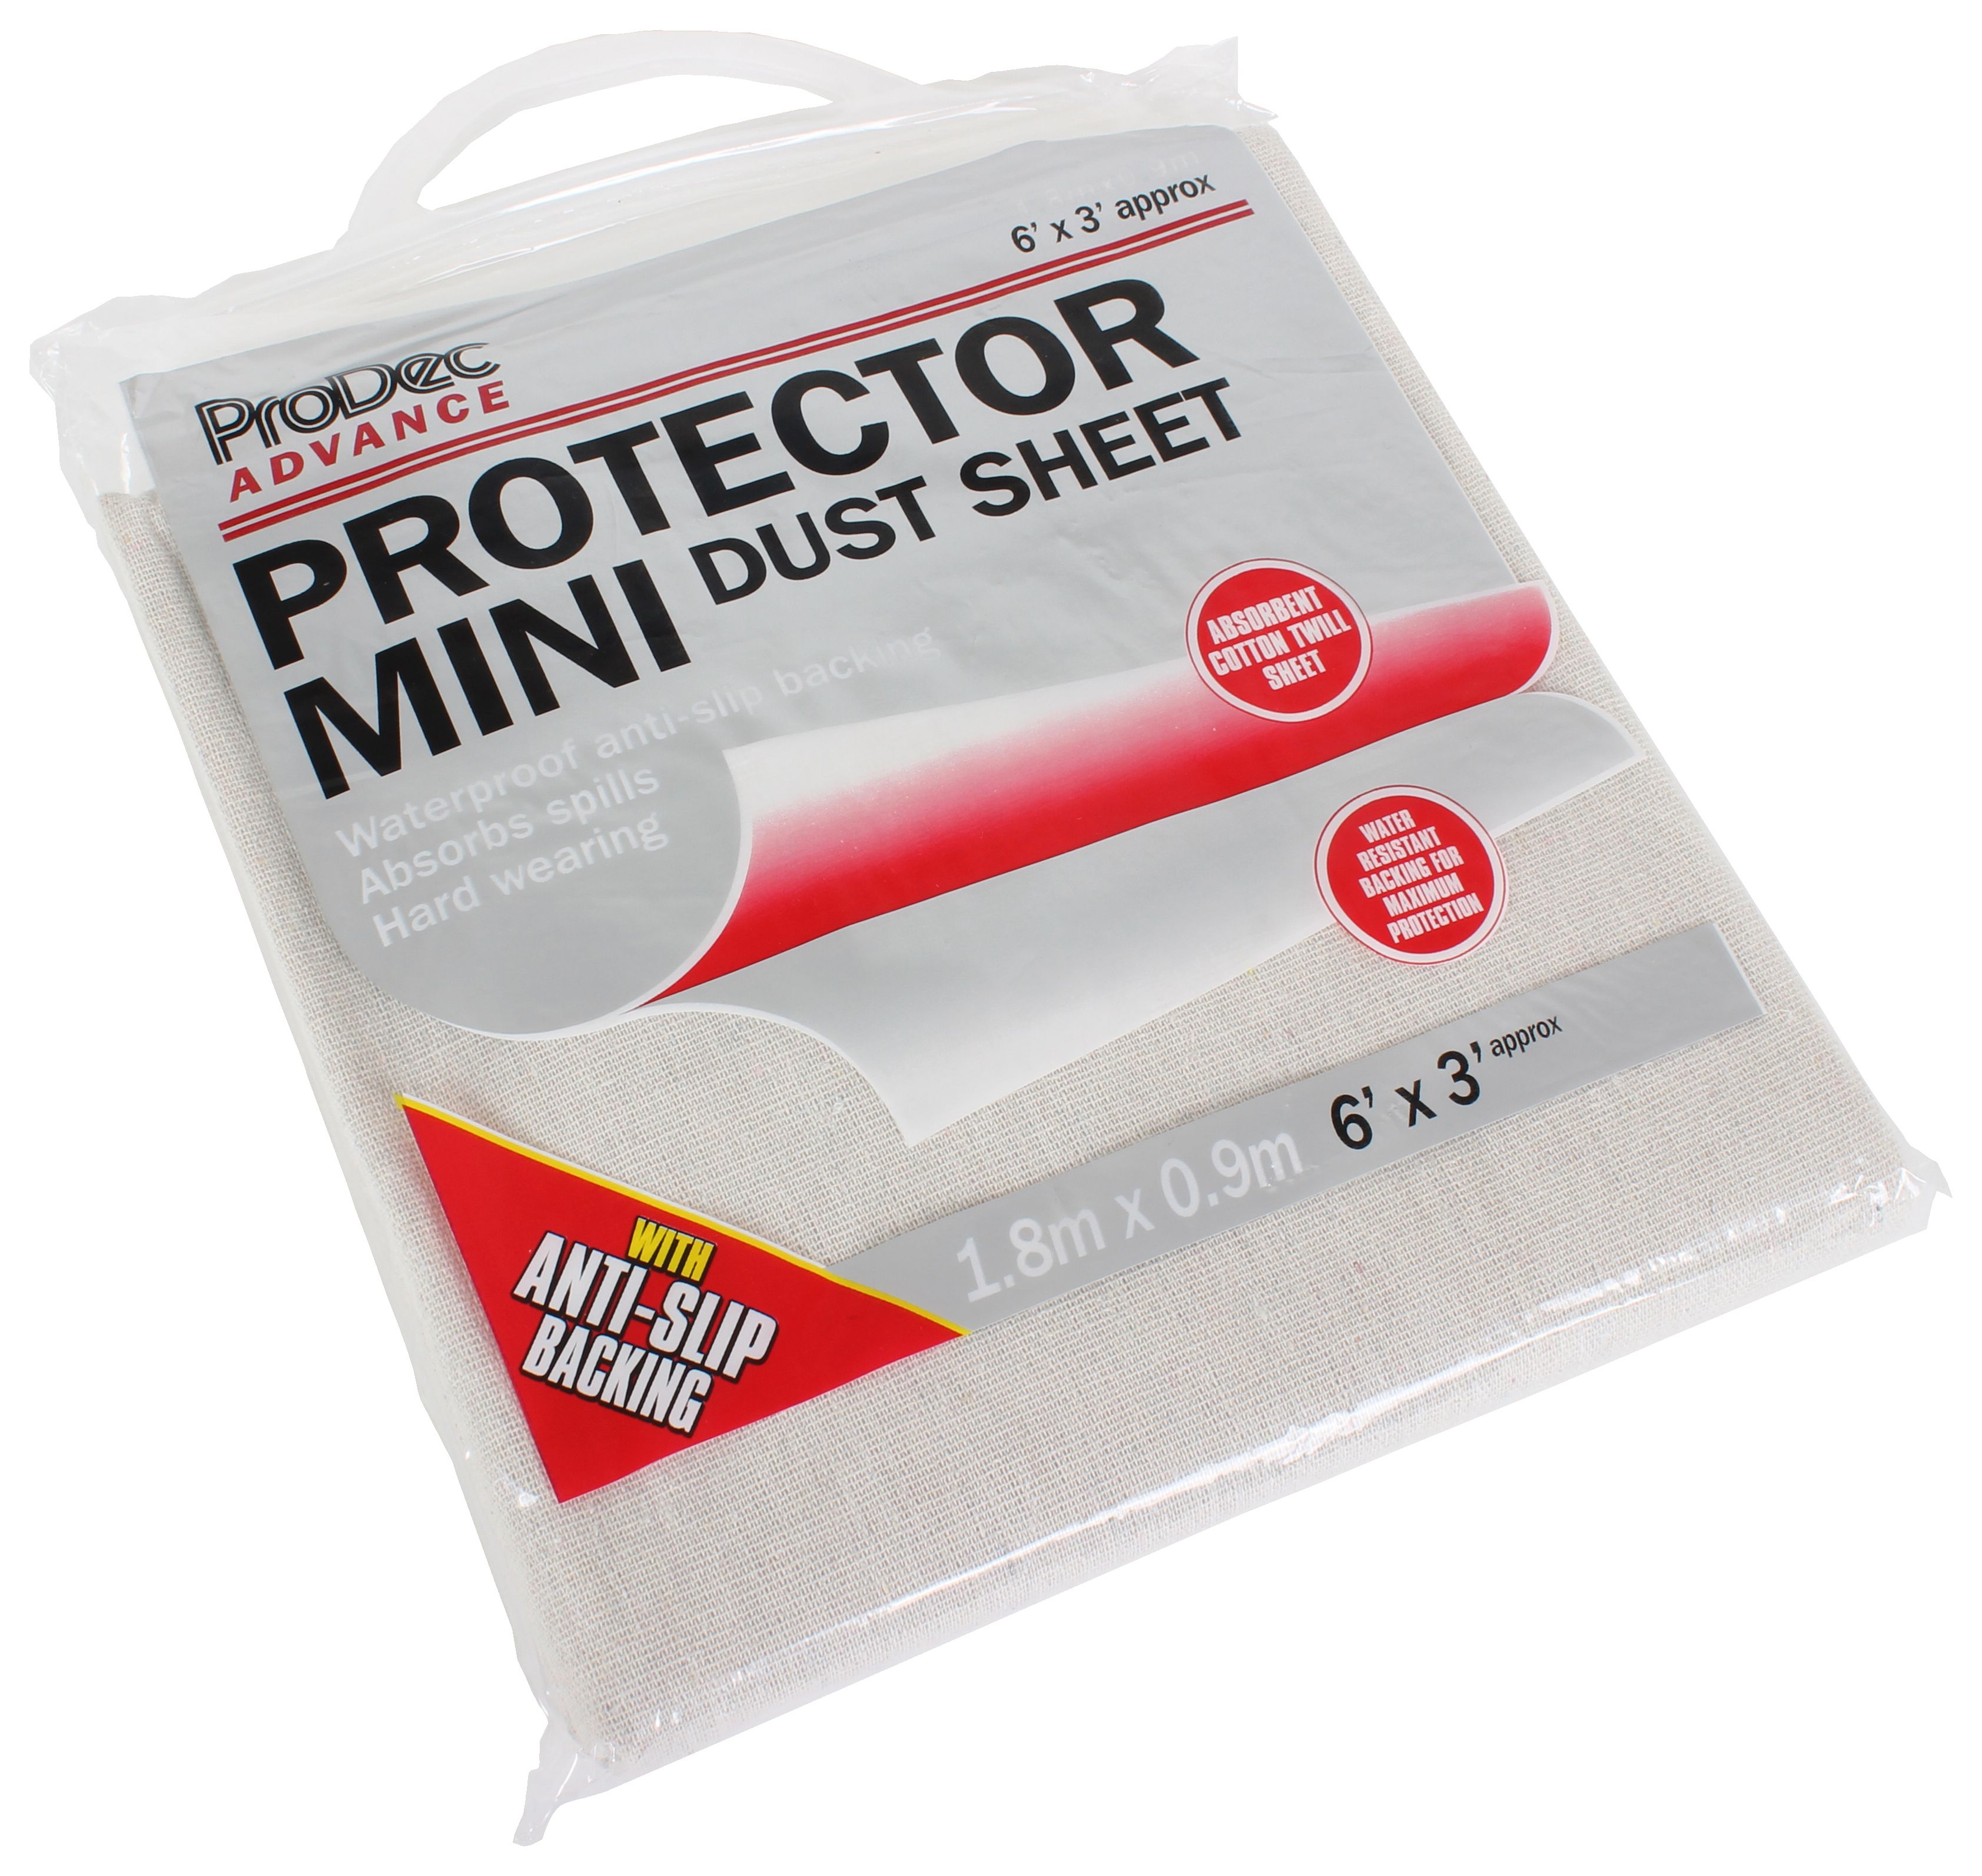 ProDec Advance Protector Dust Sheet - 6 x 3ft